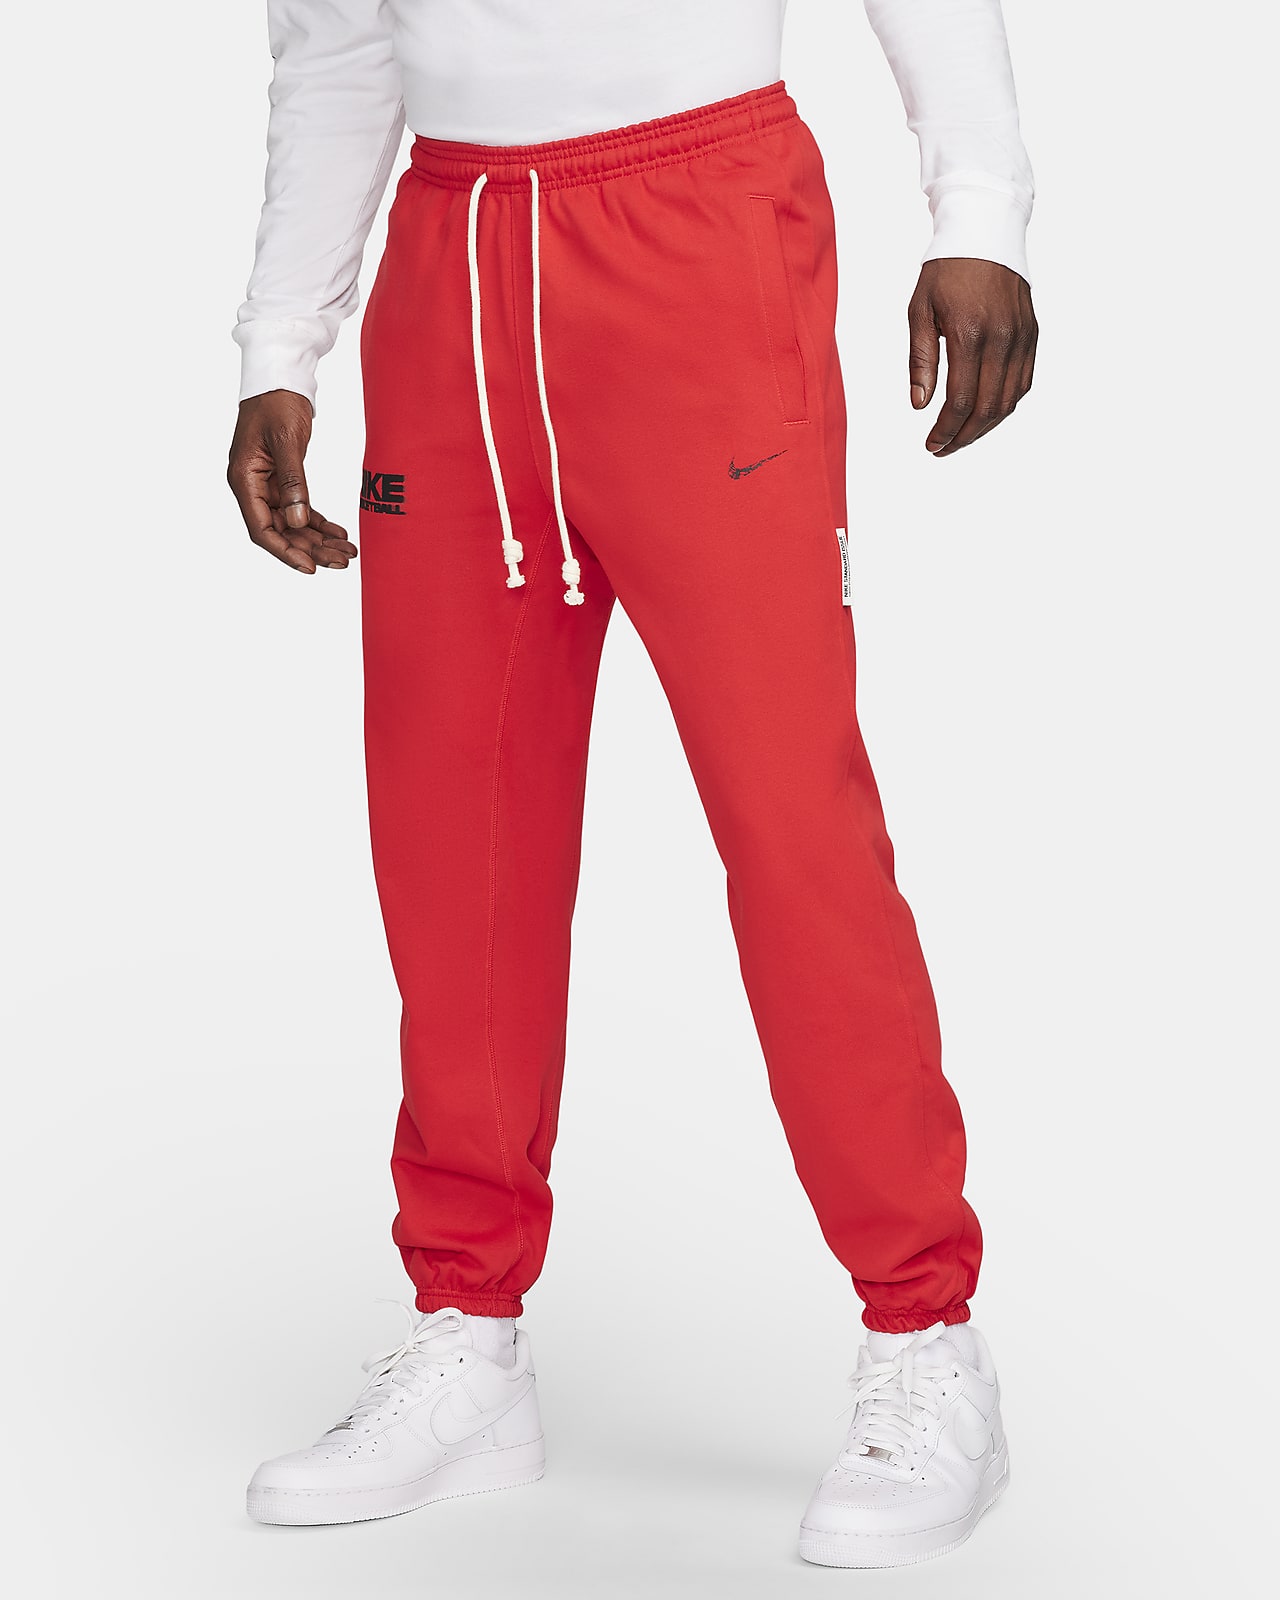 Nike Dri-fit Classic Men's Basketball Jersey (university Red